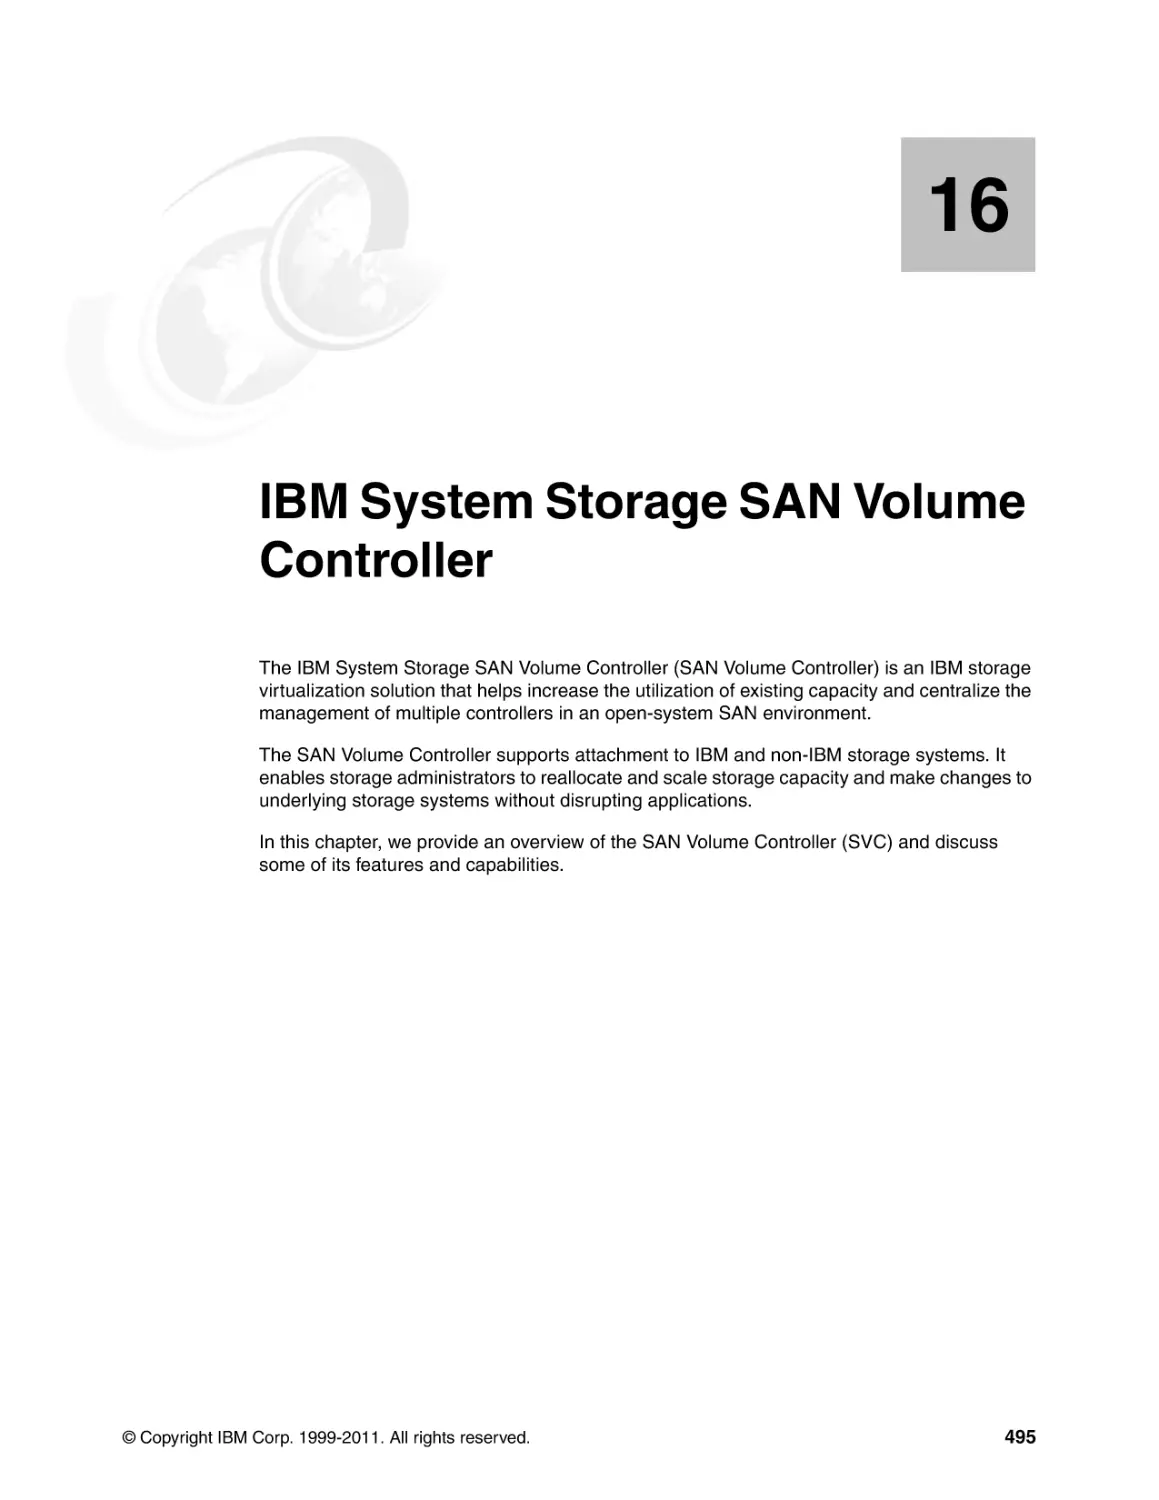 Chapter 16. IBM System Storage SAN Volume Controller